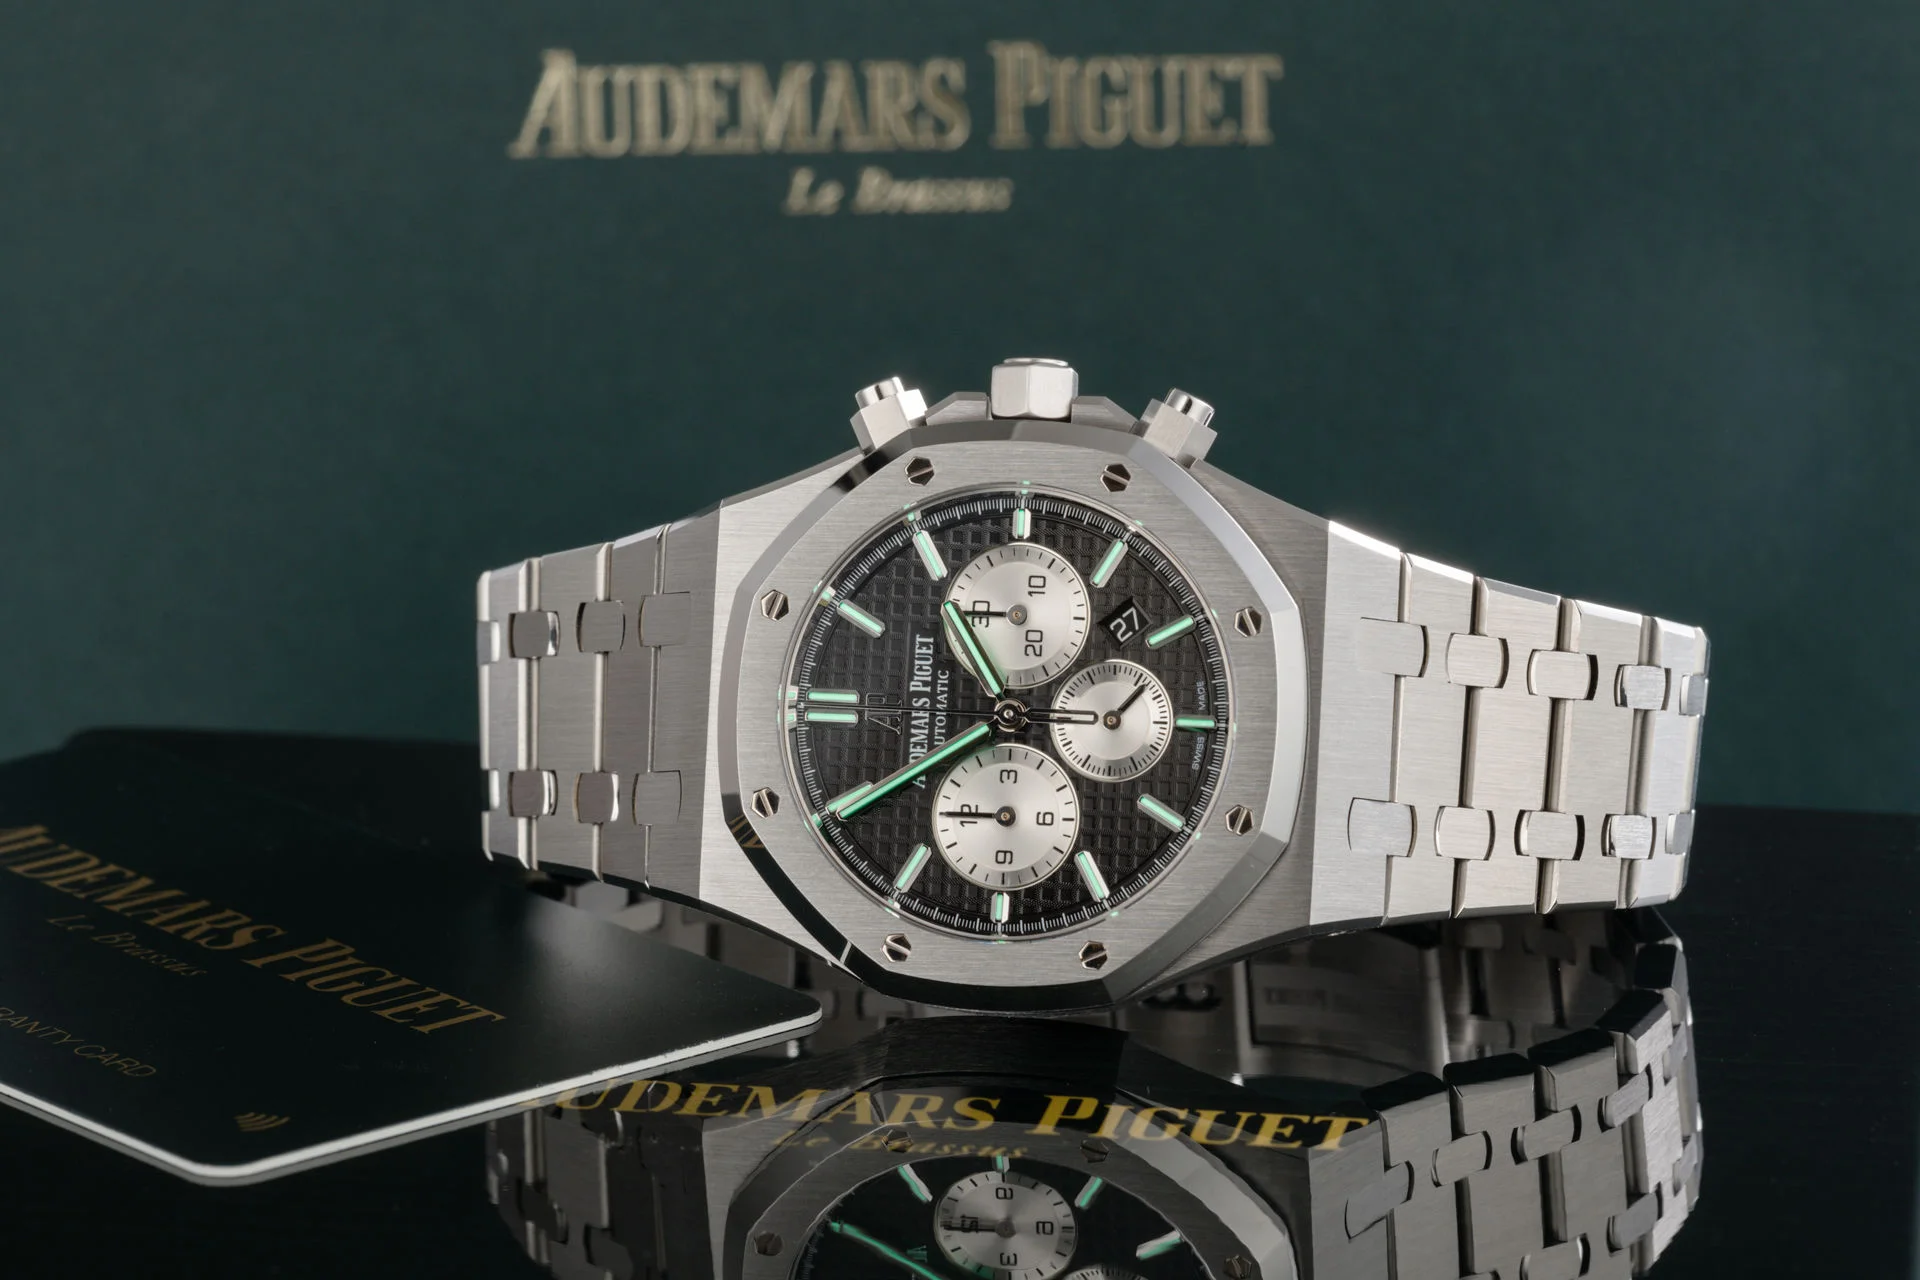 Audemars Piguet Royal Oak Chronograph Watches | ref 26331ST.OO.1220ST.02 |  Complete Set 'Under AP Warranty' | The Watch Club